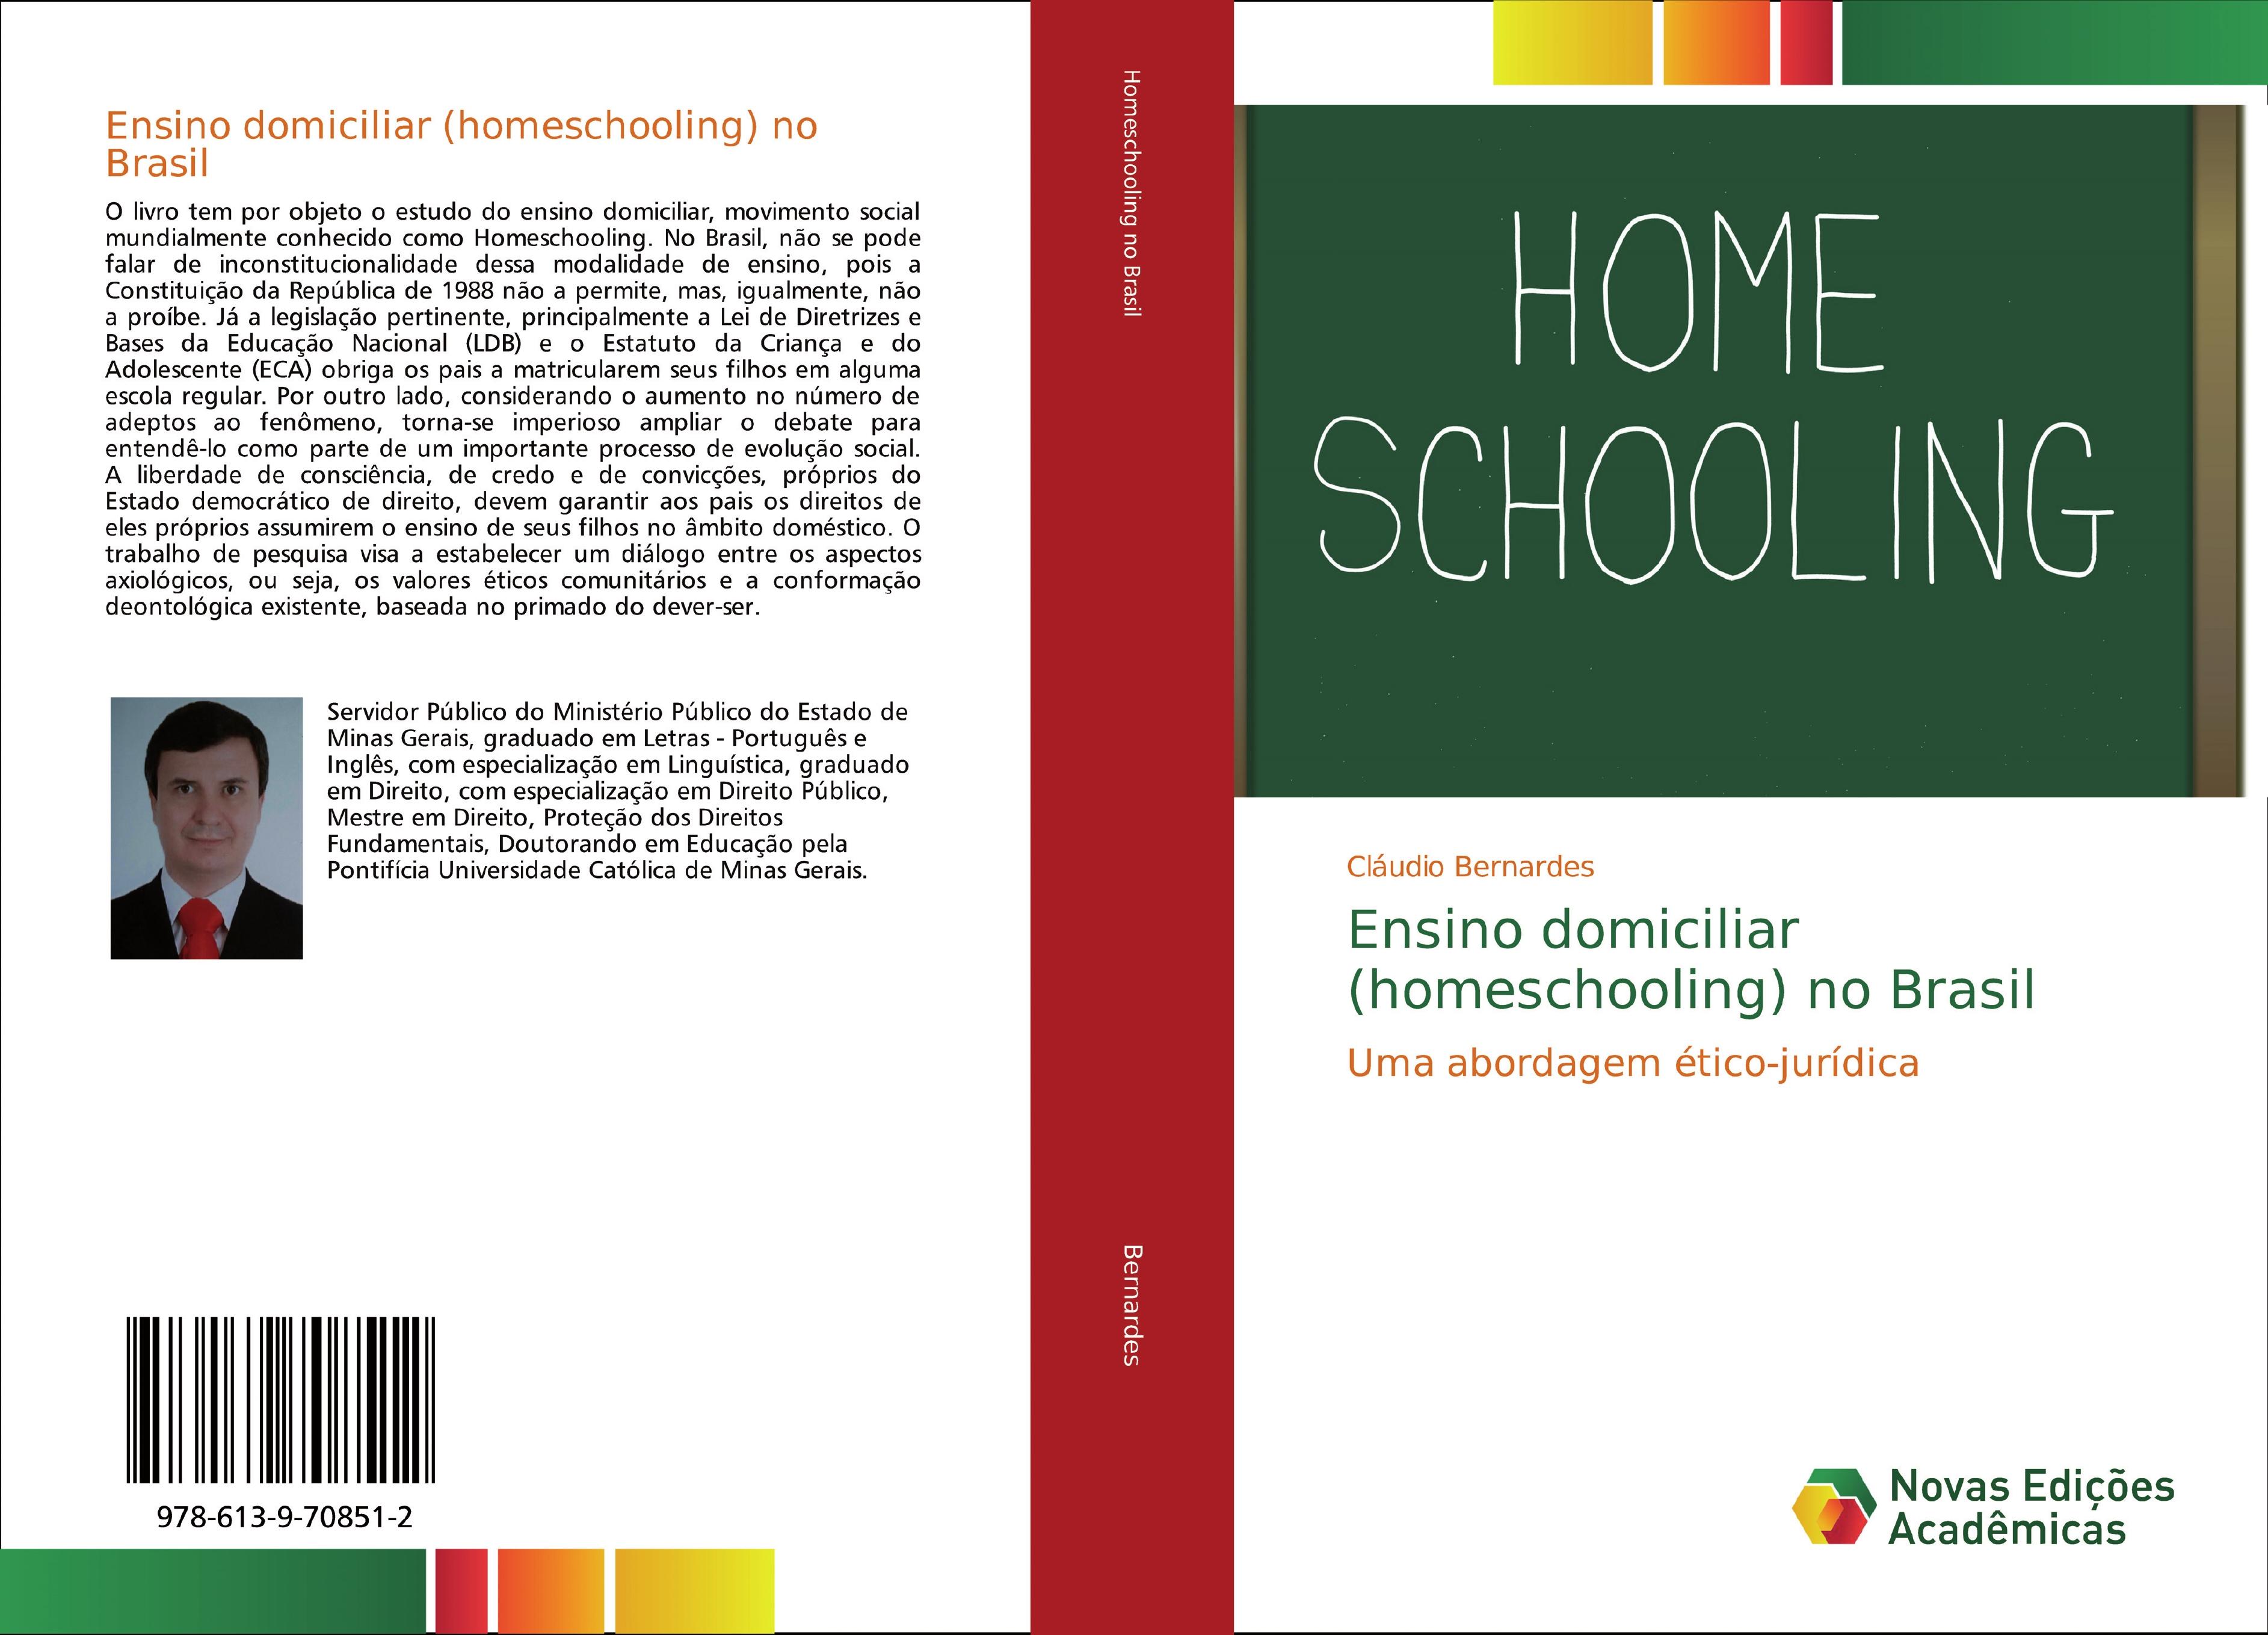 Ensino domiciliar (homeschooling) no Brasil - Cláudio Bernardes